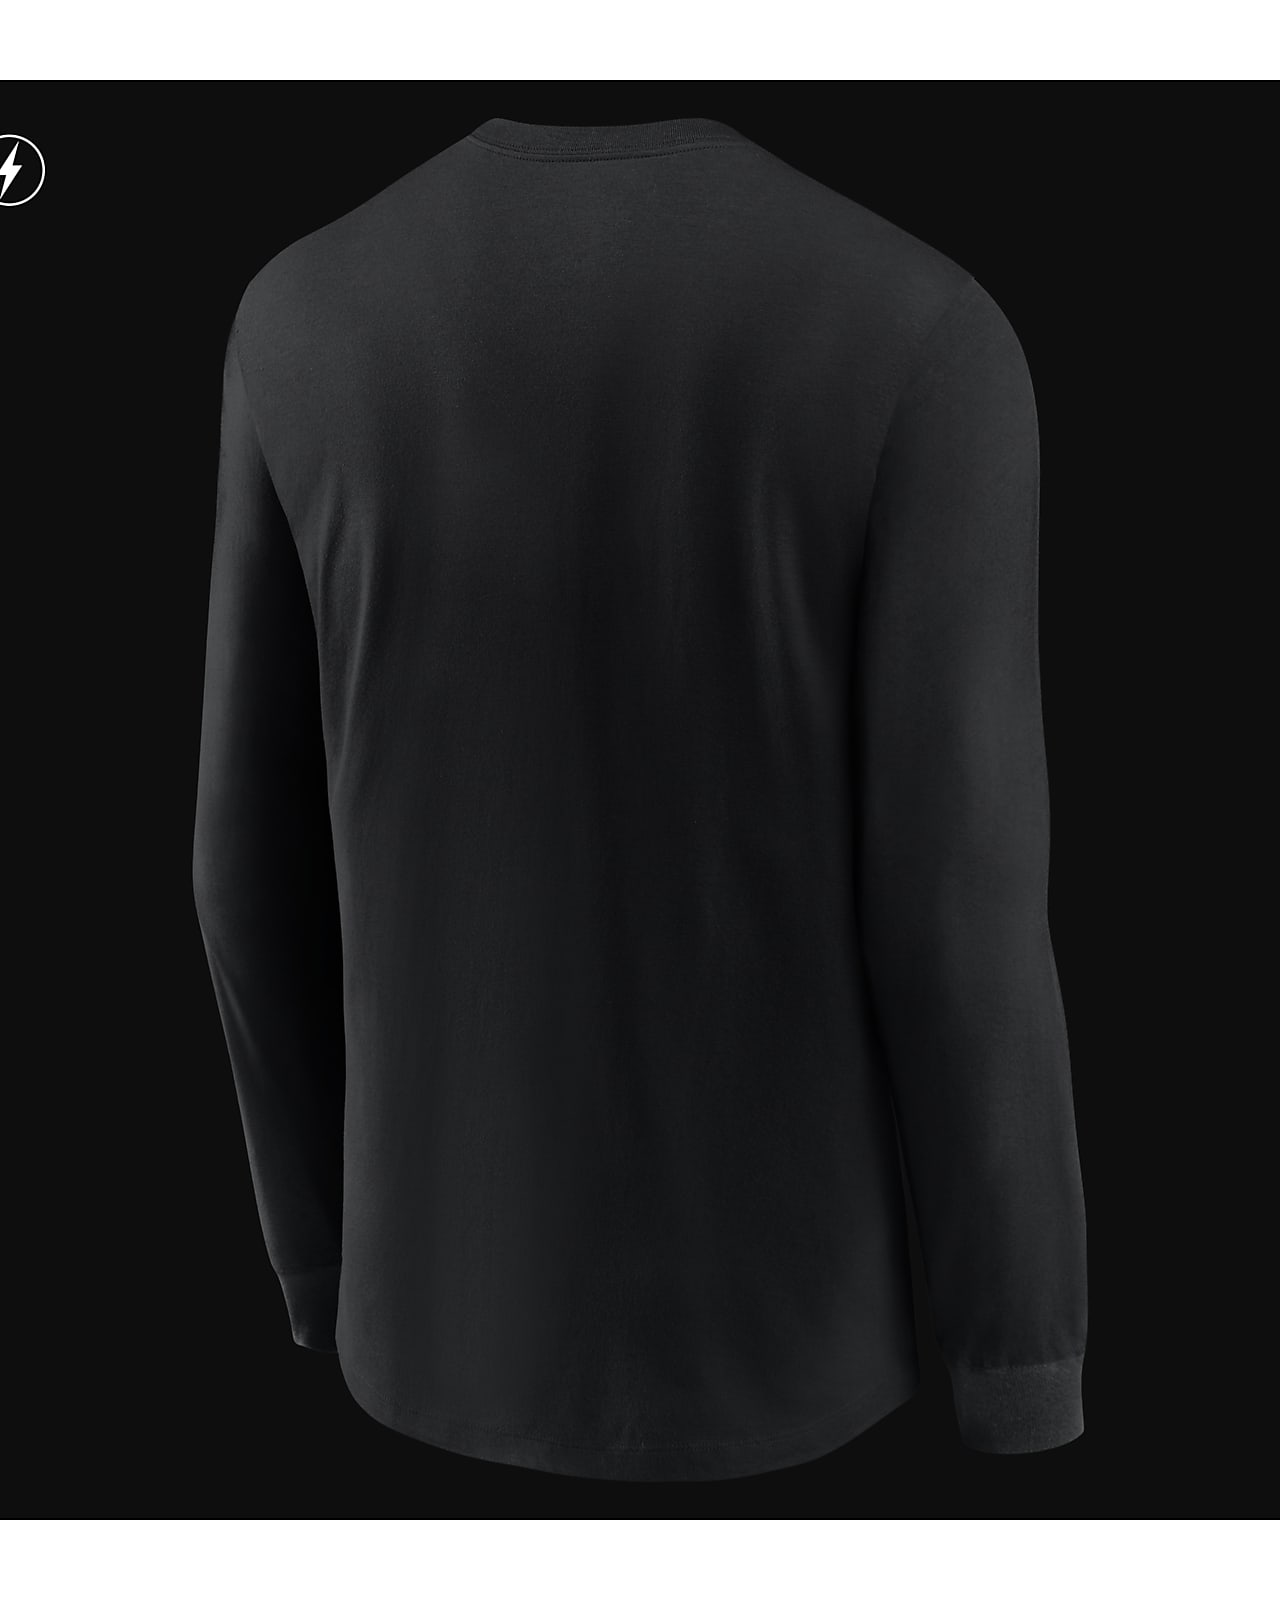 Nike Dri-FIT Sideline Team (NFL Las Vegas Raiders) Men's Long-Sleeve T-Shirt.  Nike.com